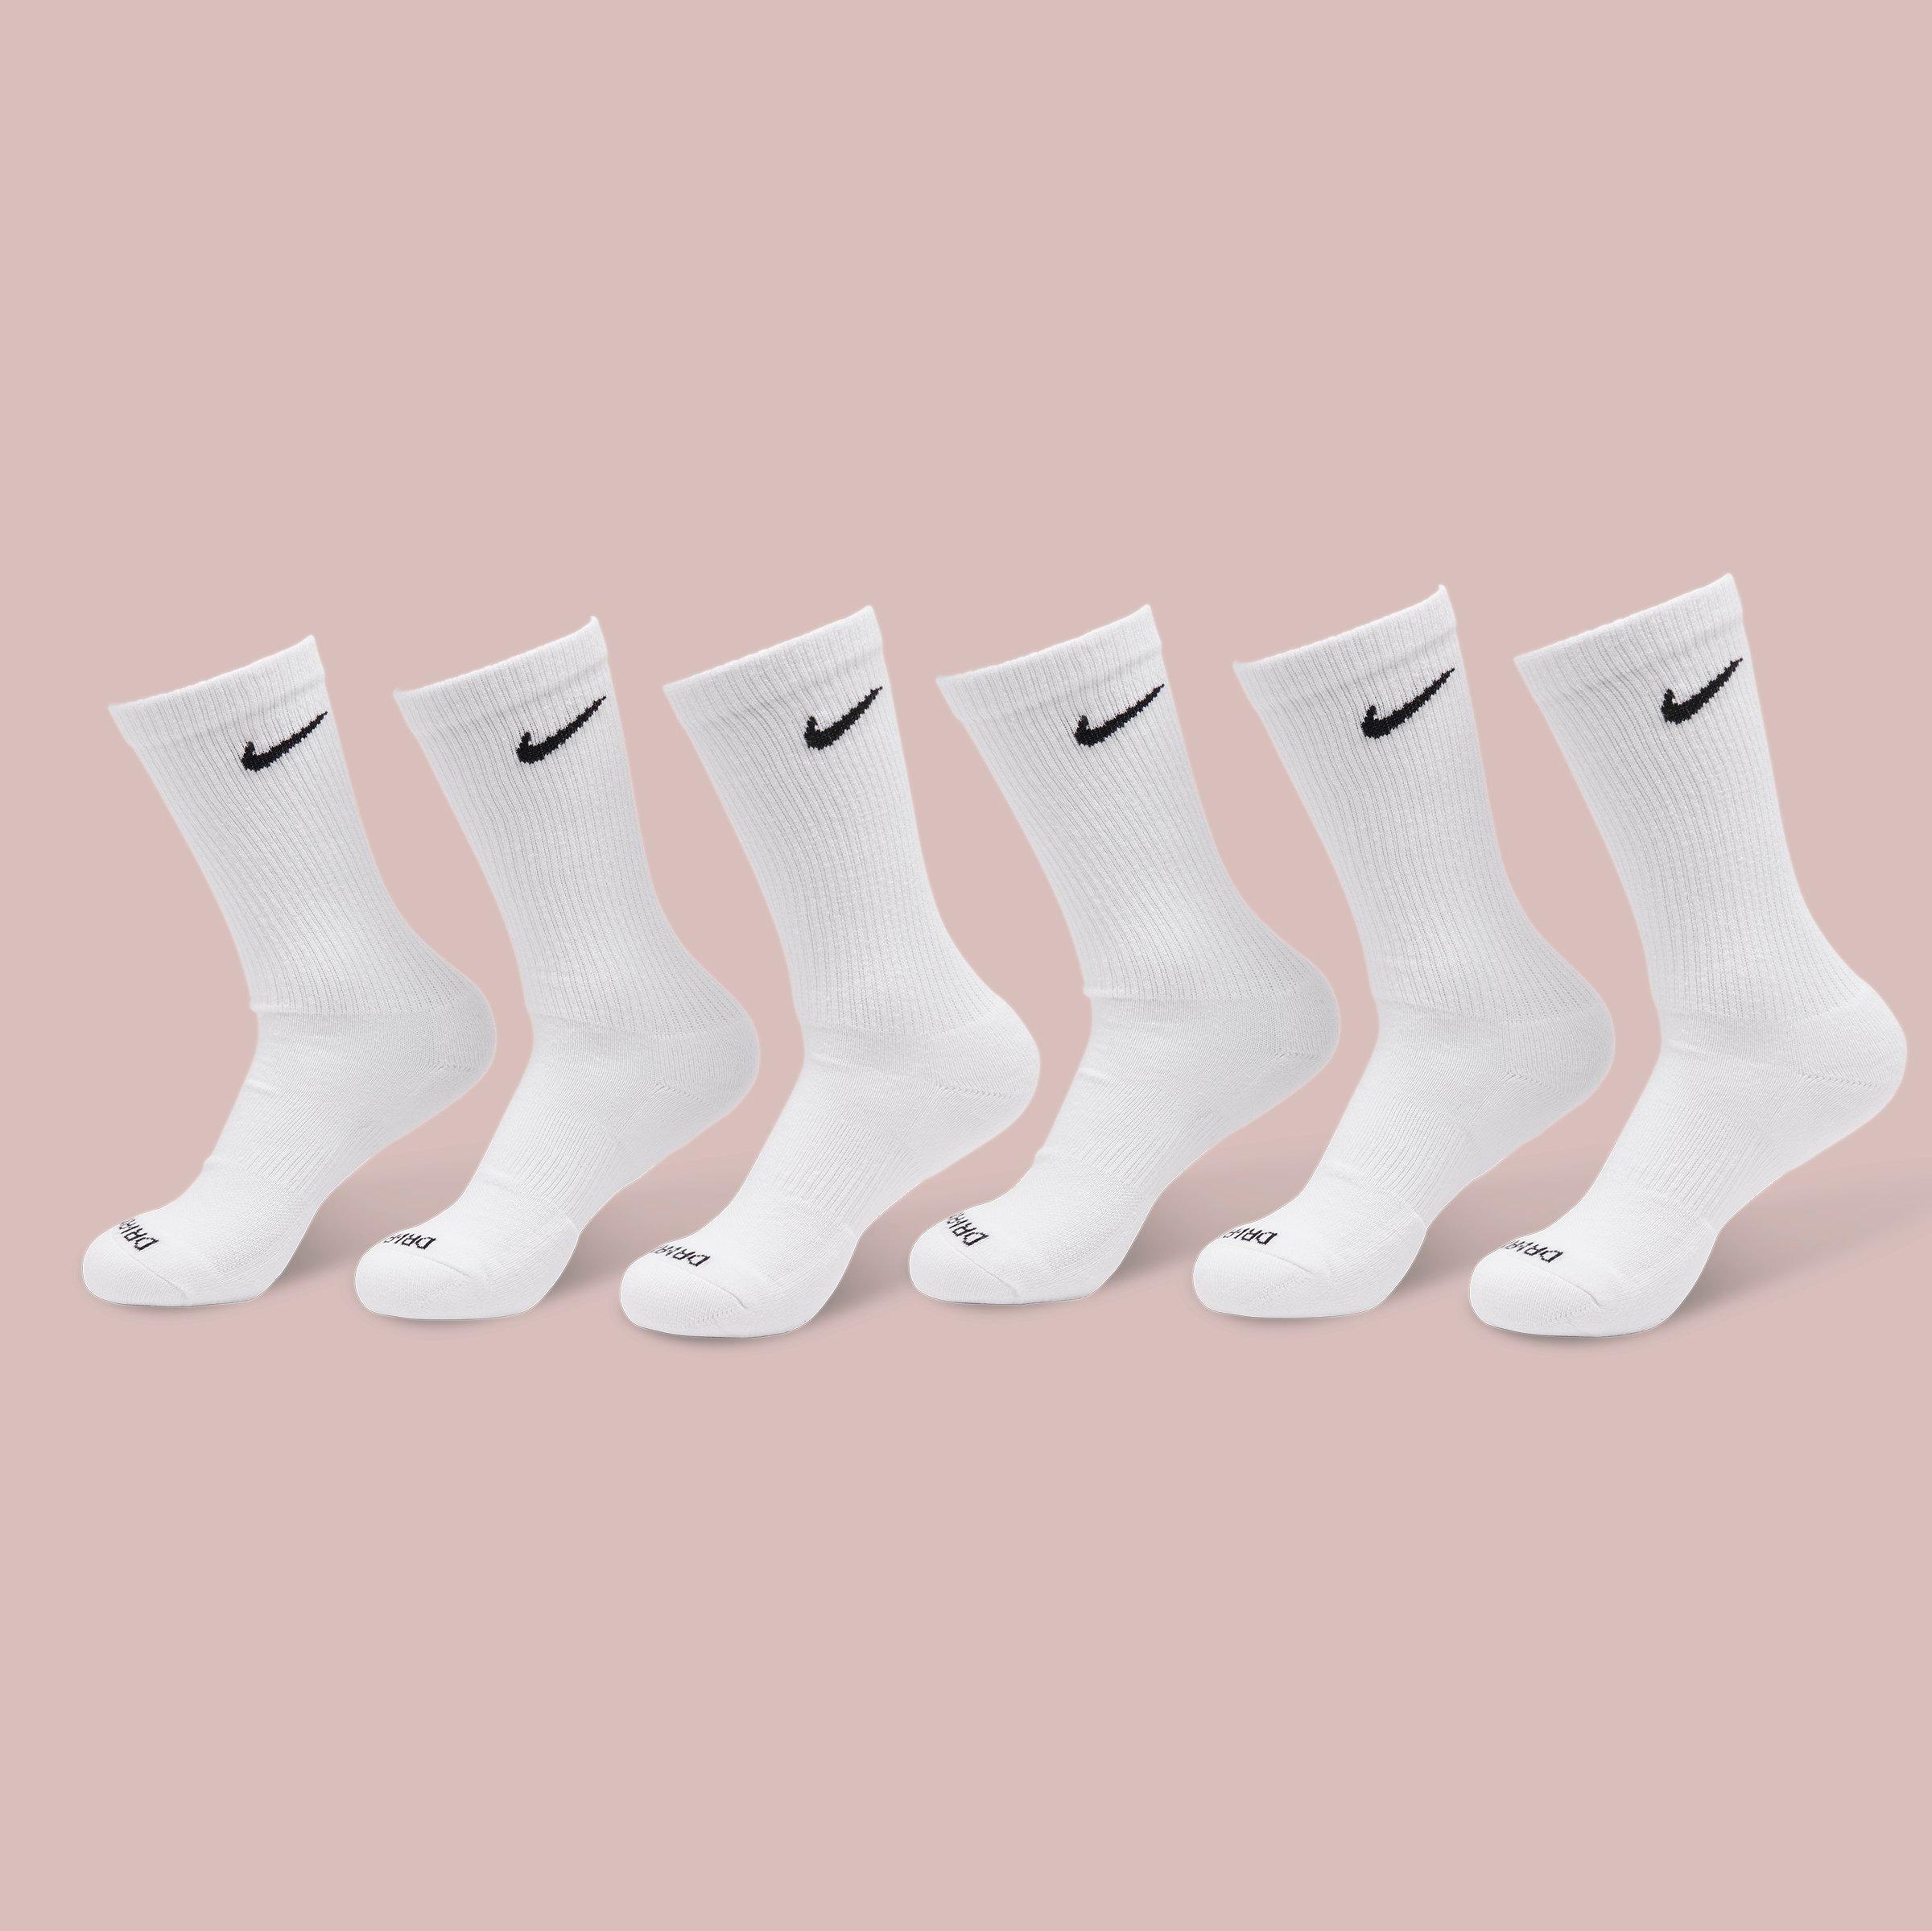 nike white socks 6 pack